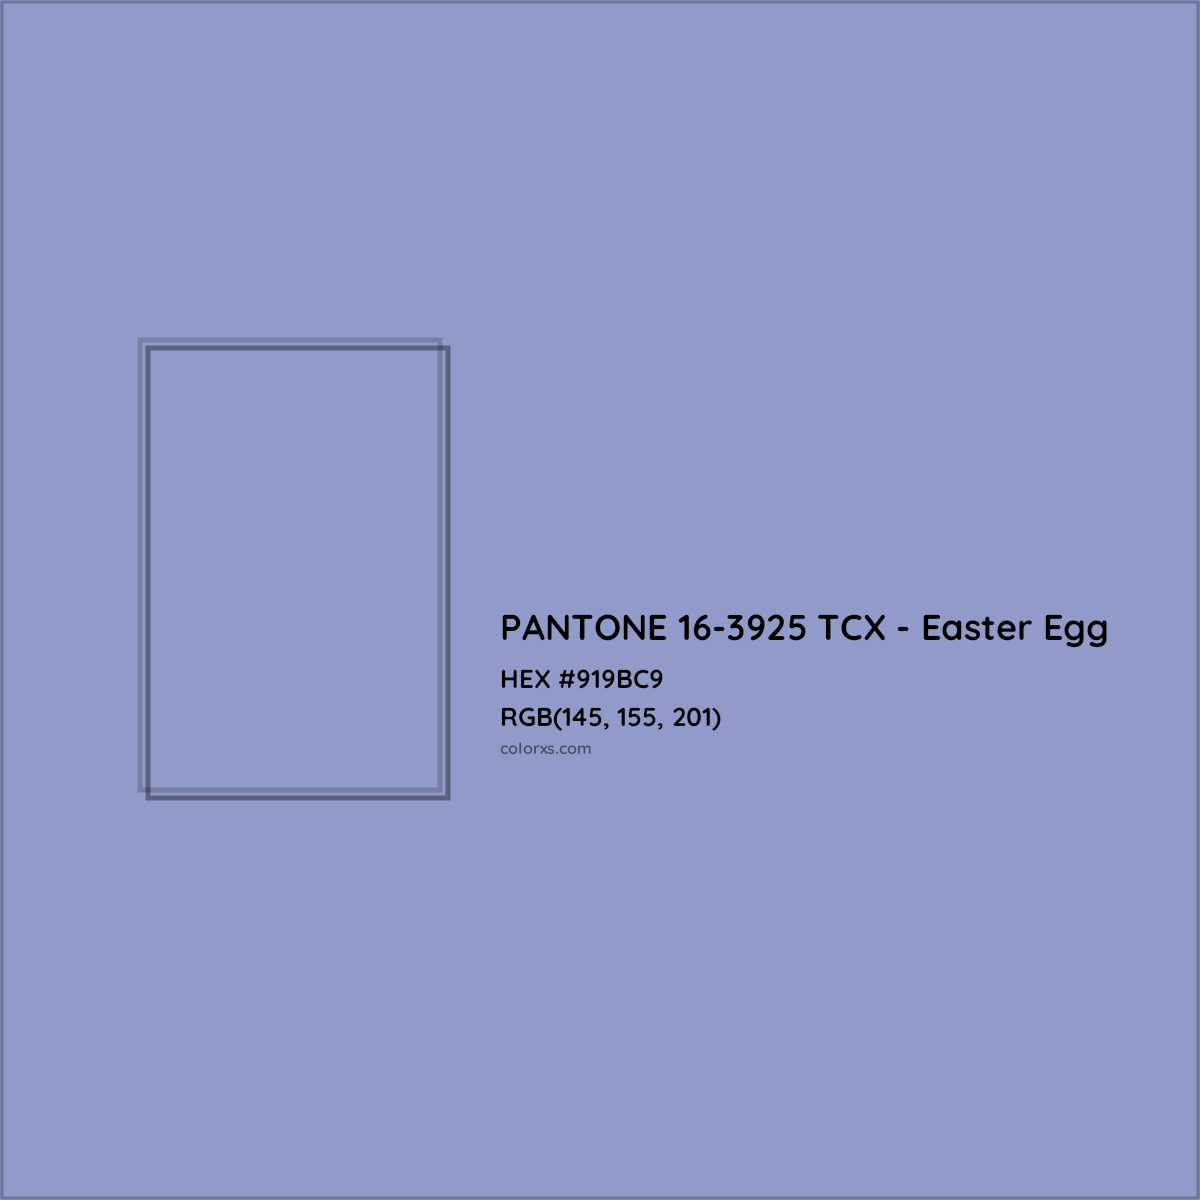 HEX #919BC9 PANTONE 16-3925 TCX - Easter Egg CMS Pantone TCX - Color Code